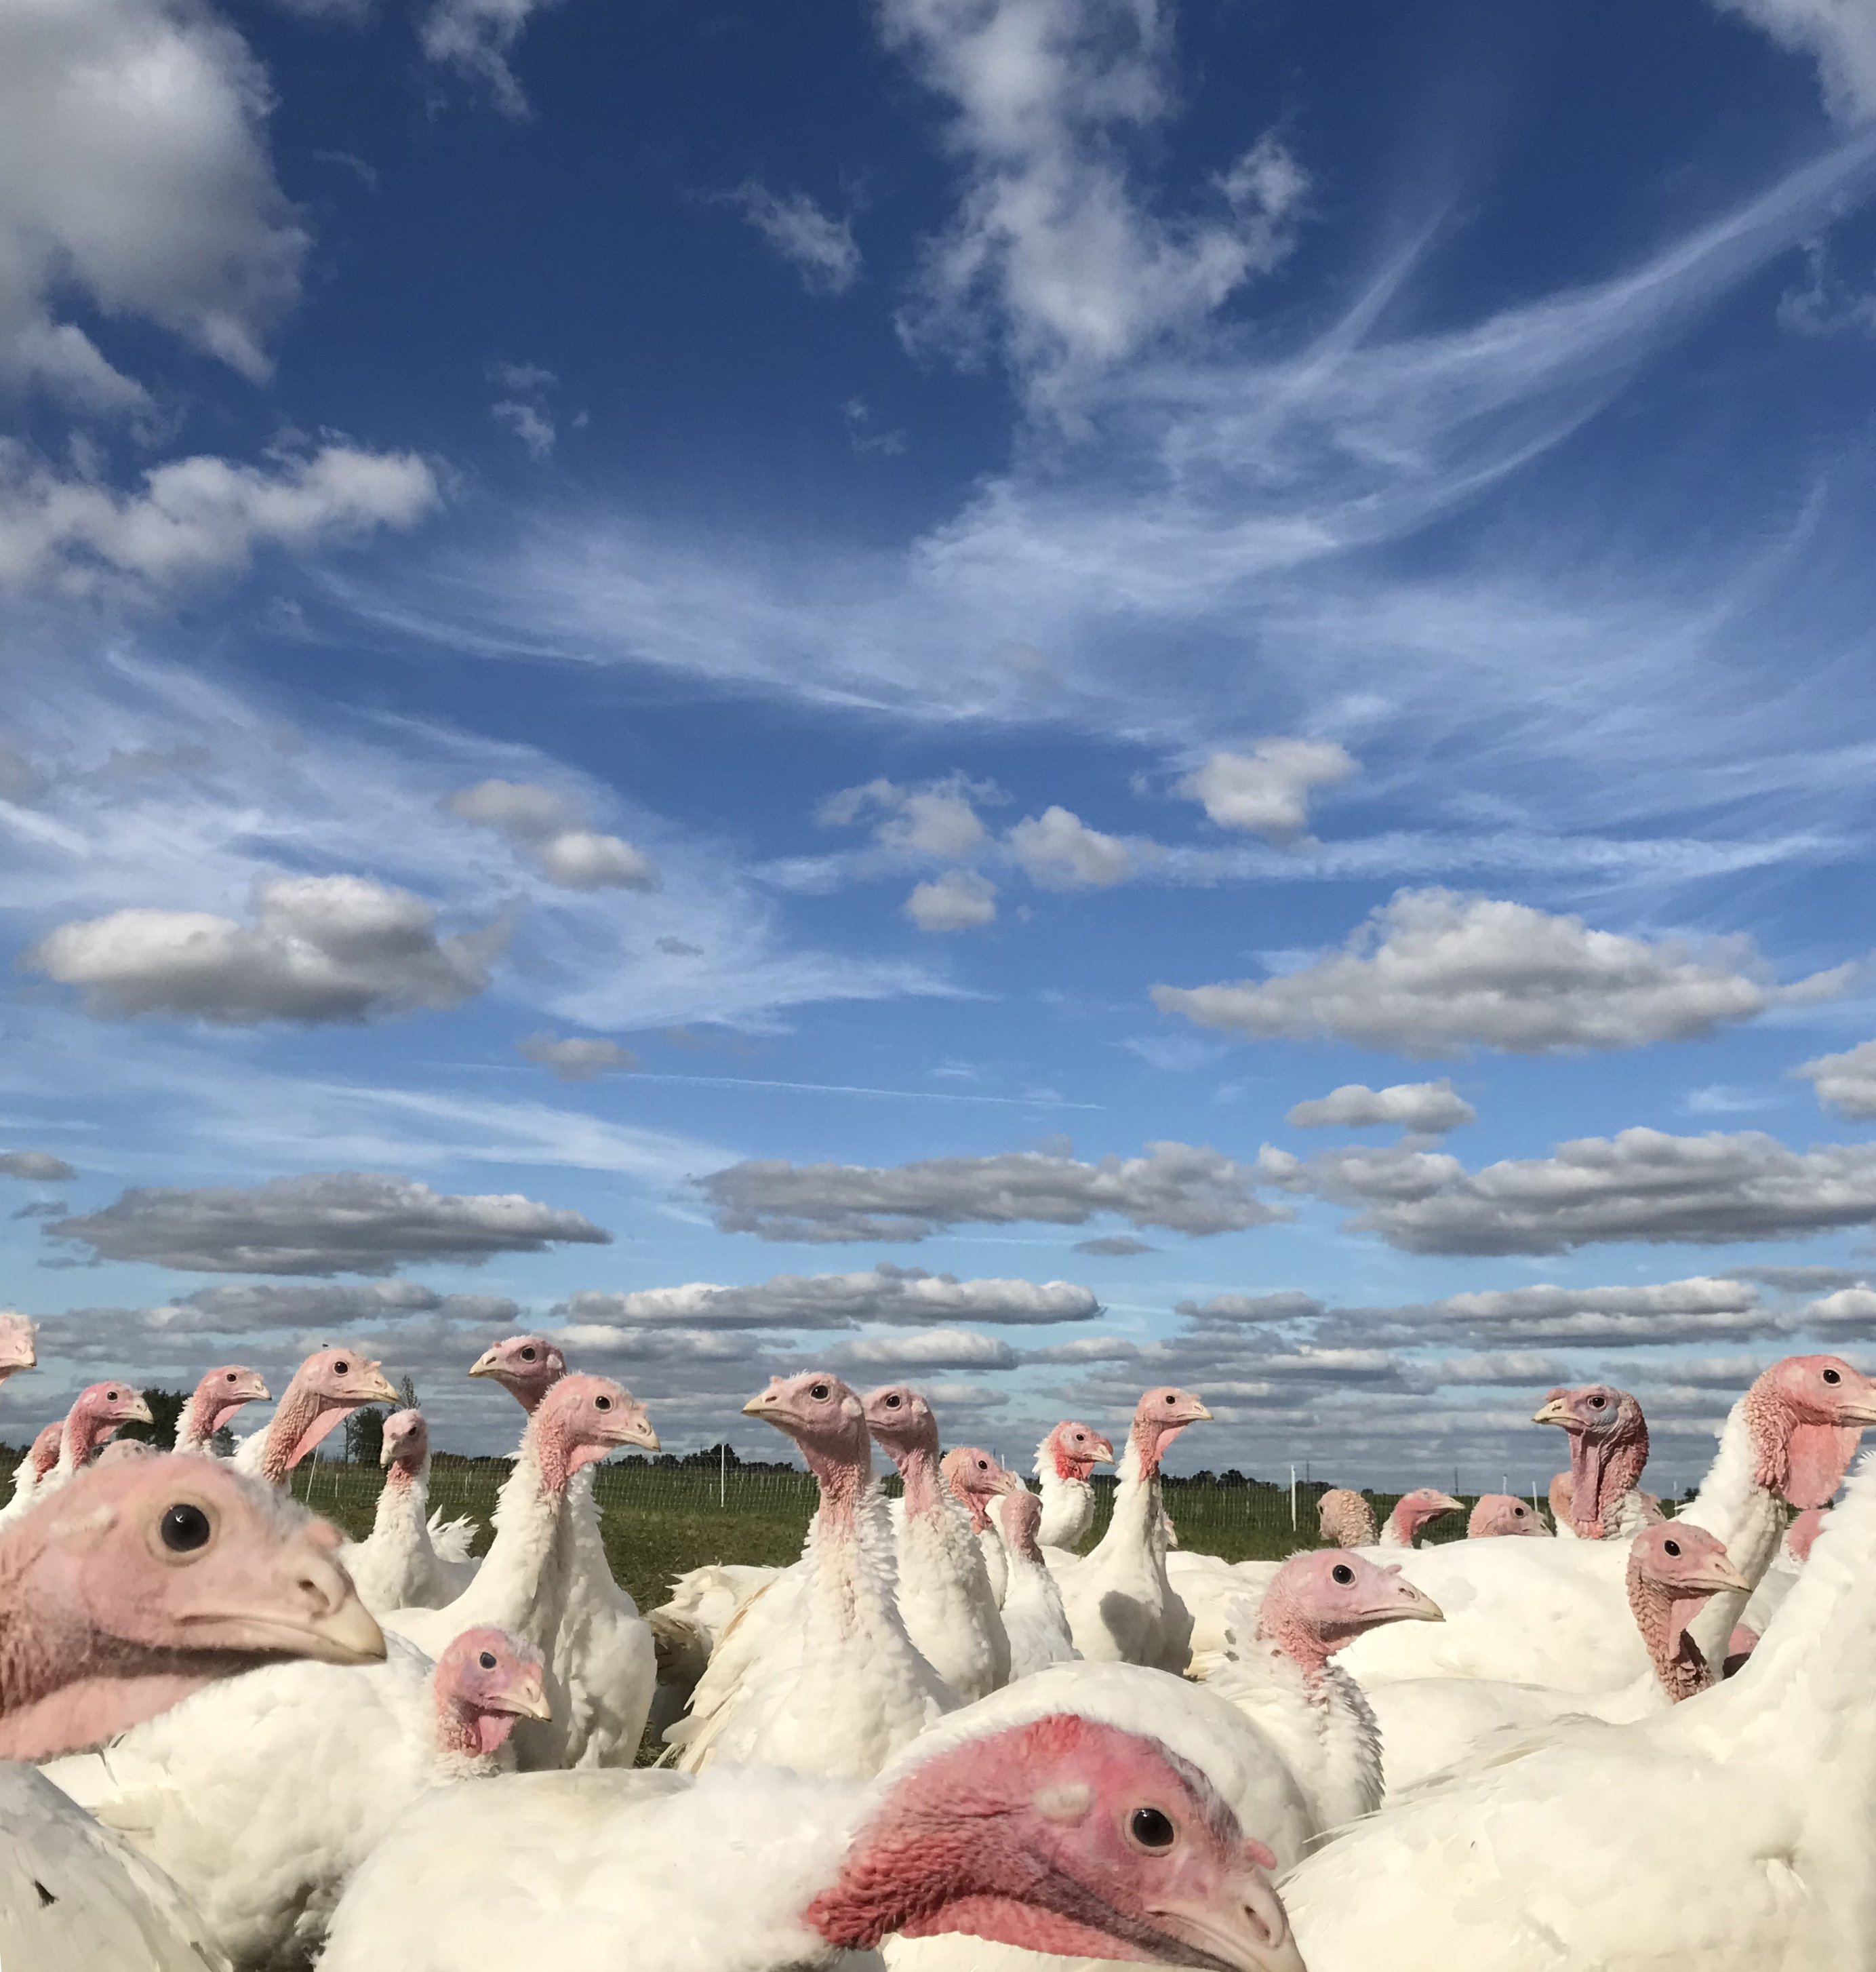 Next Happening: Farm Photo: Turkeys!